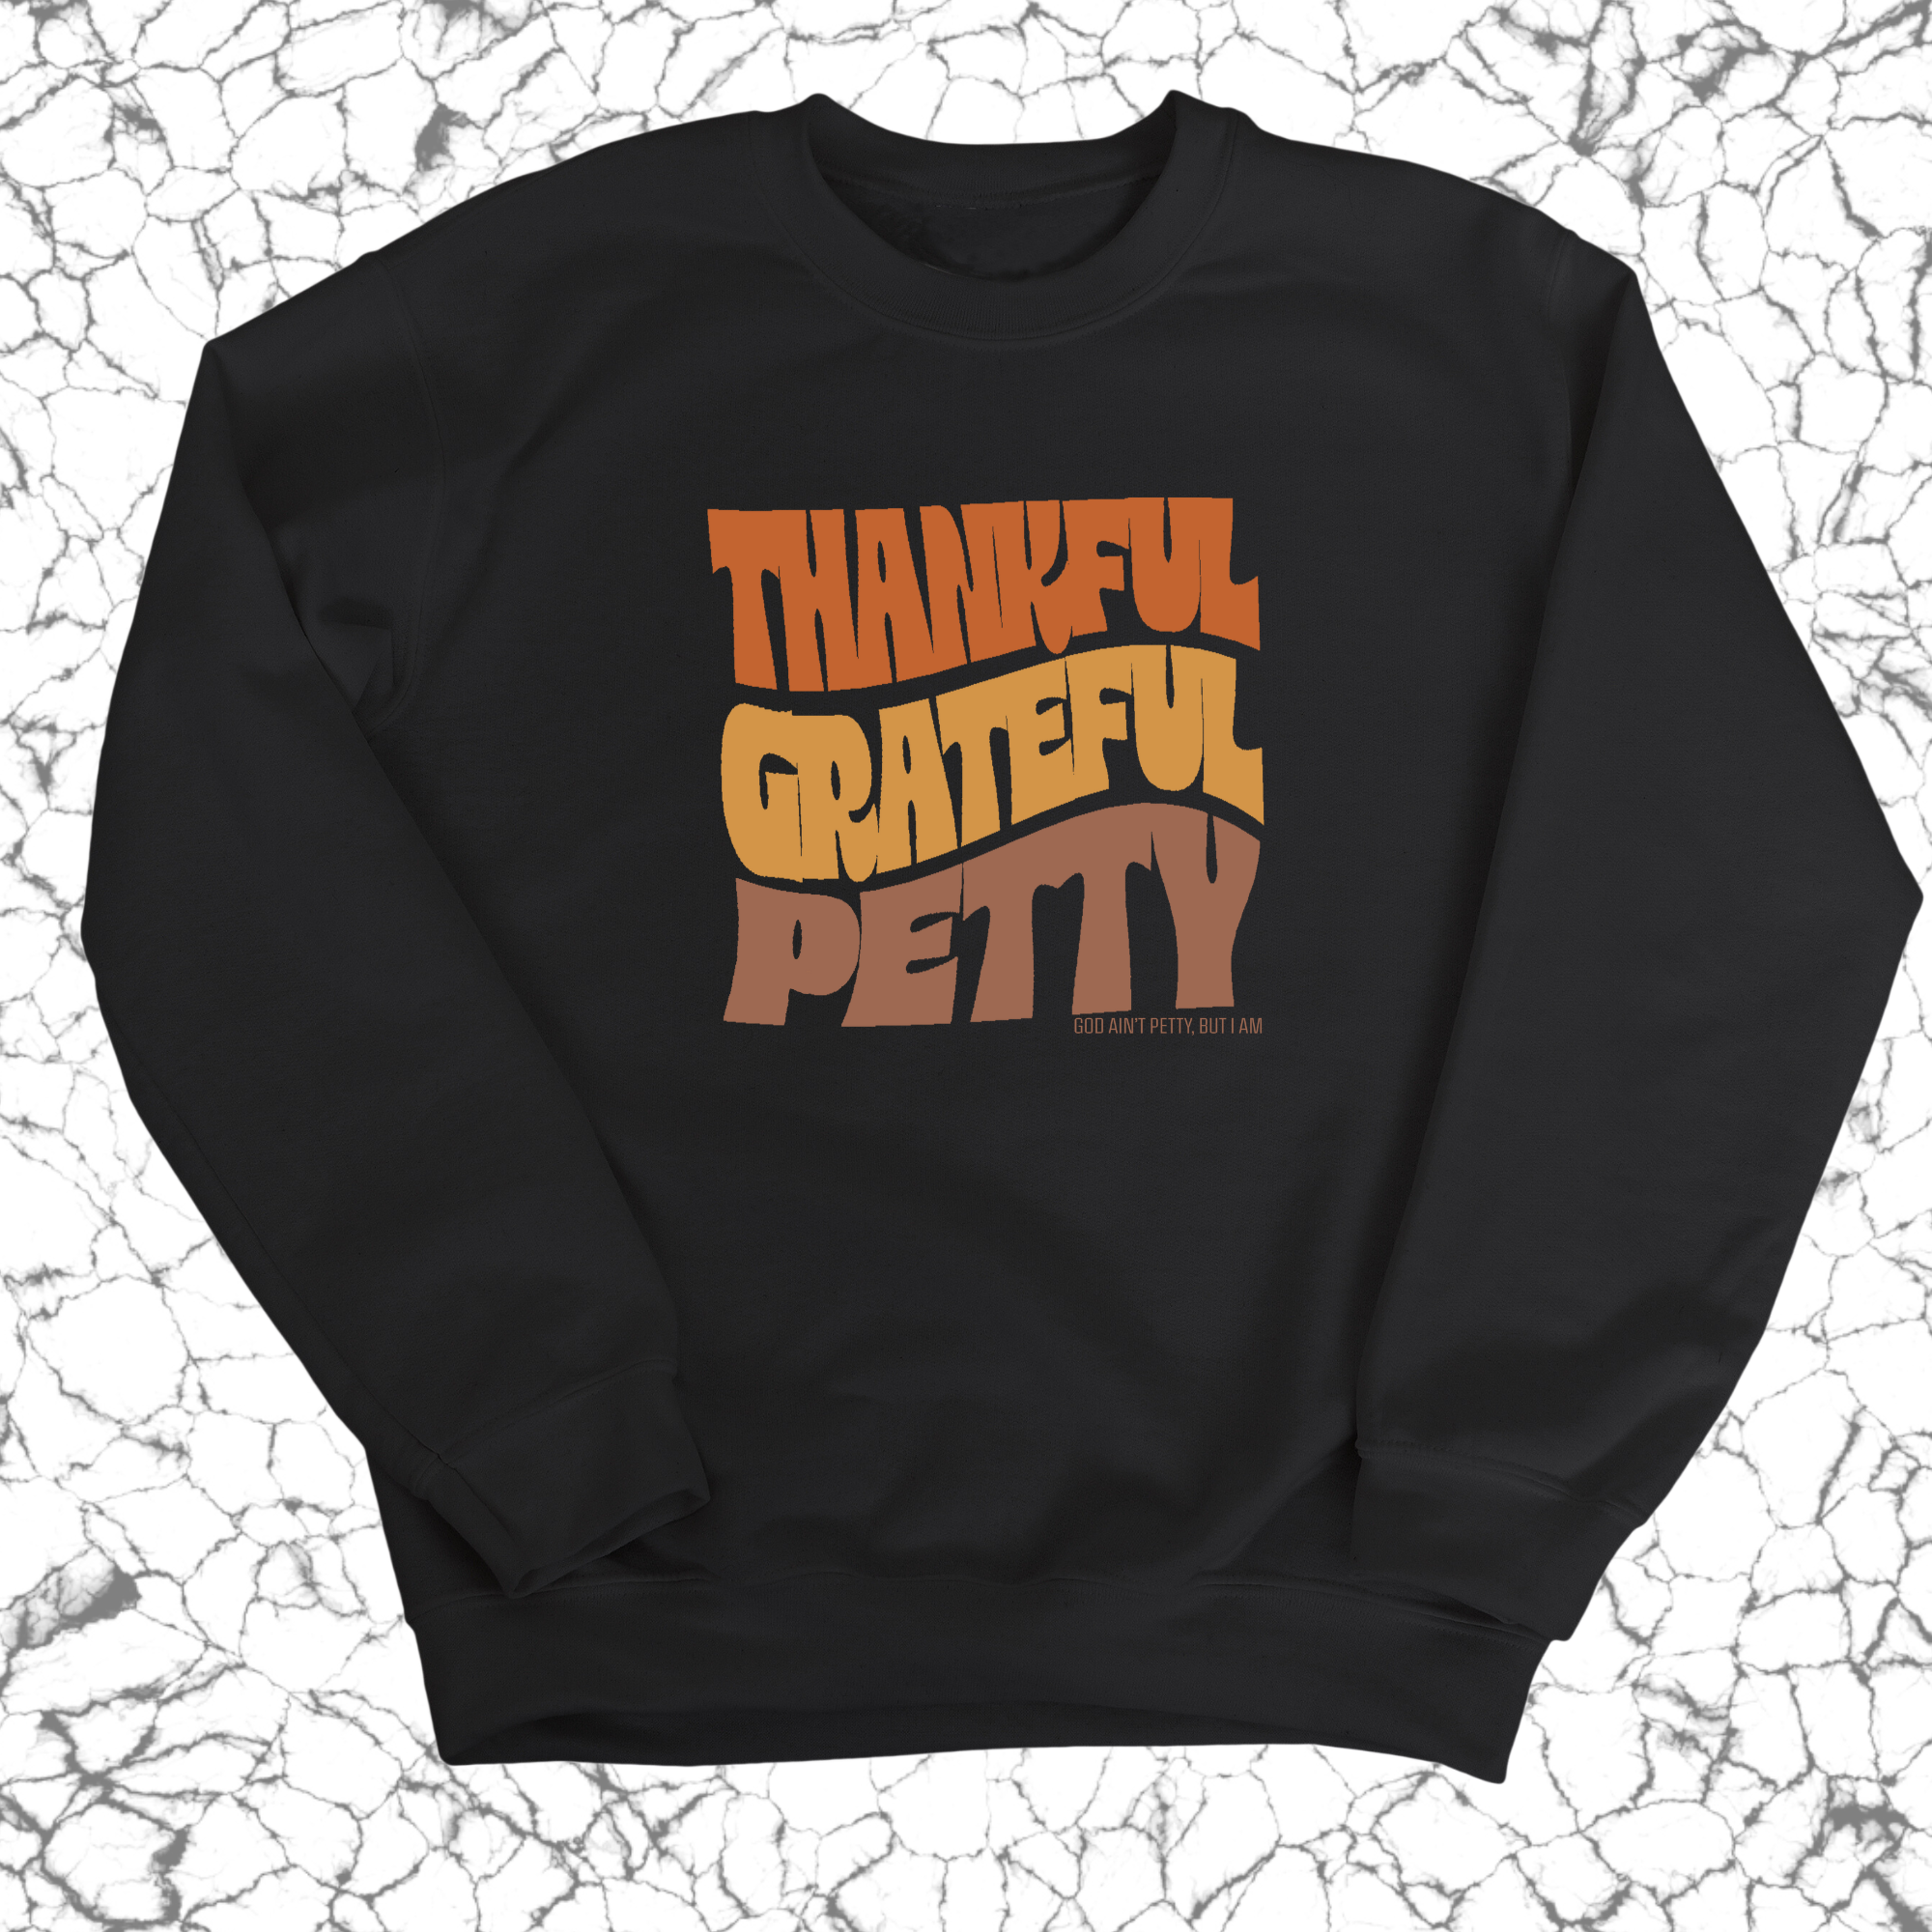 Thankful Grateful Petty Fall Colors Unisex Sweatshirt-Sweatshirt-The Original God Ain't Petty But I Am